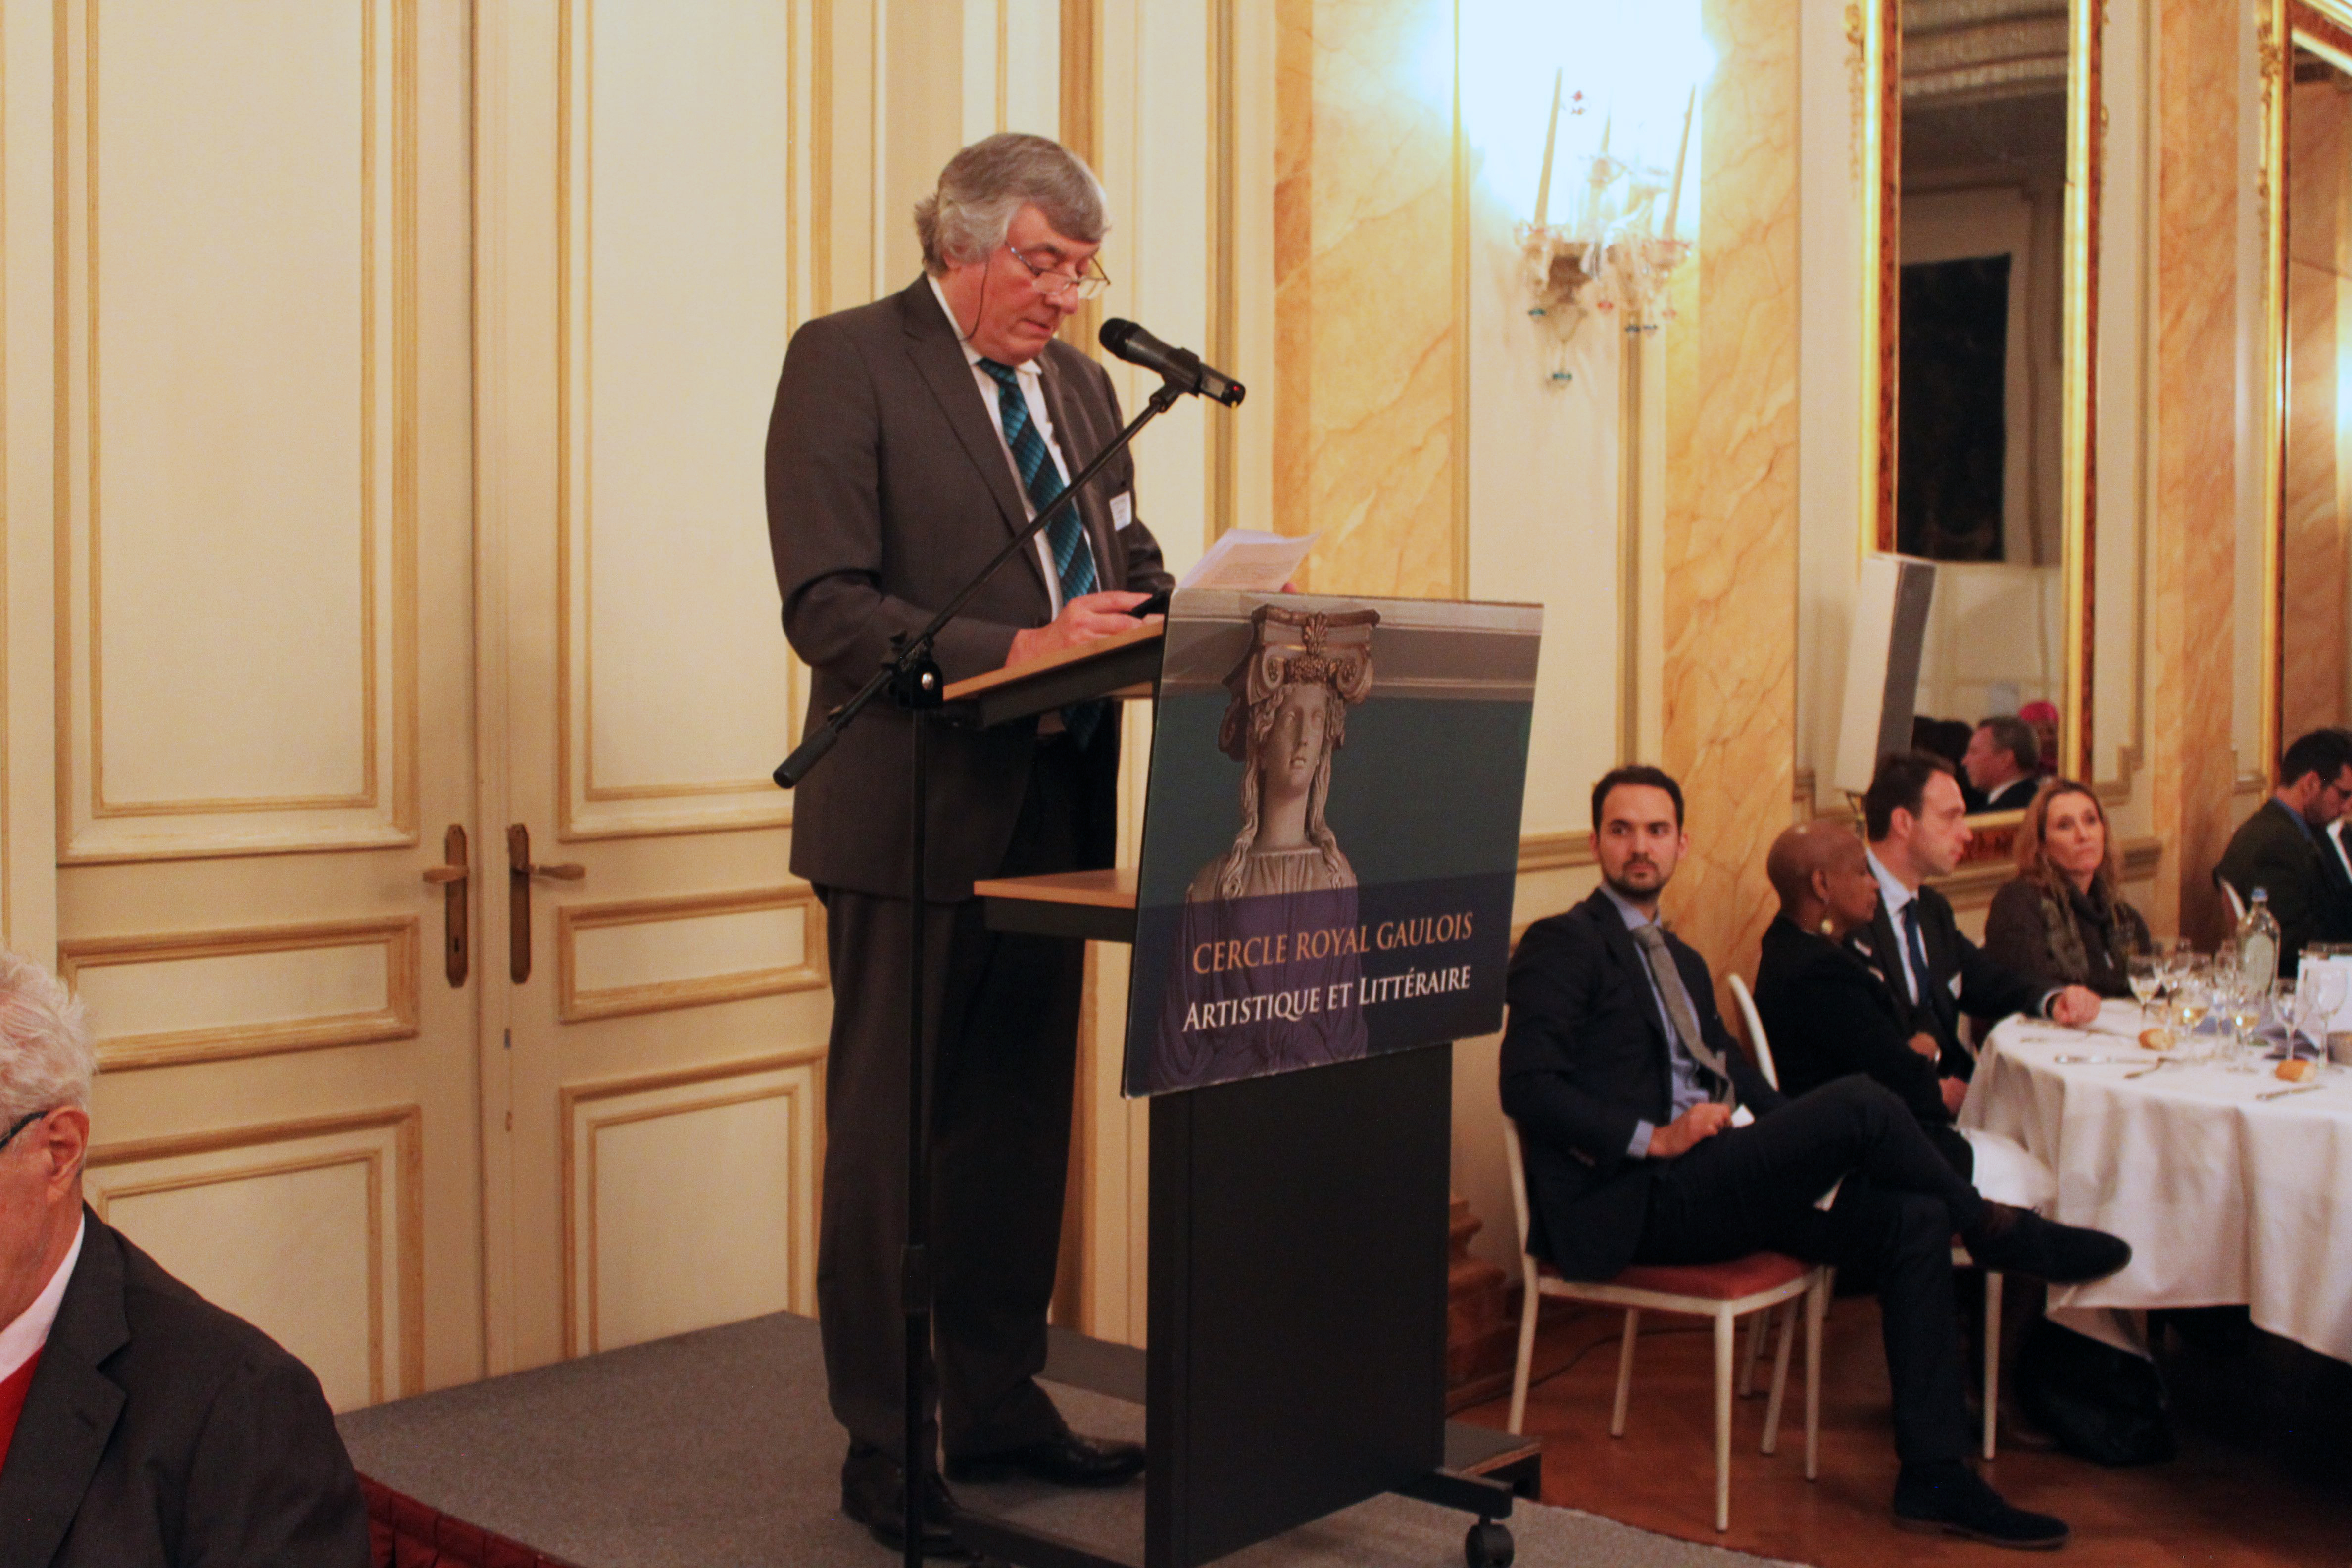 Speech at Cercle Royal Gaulois